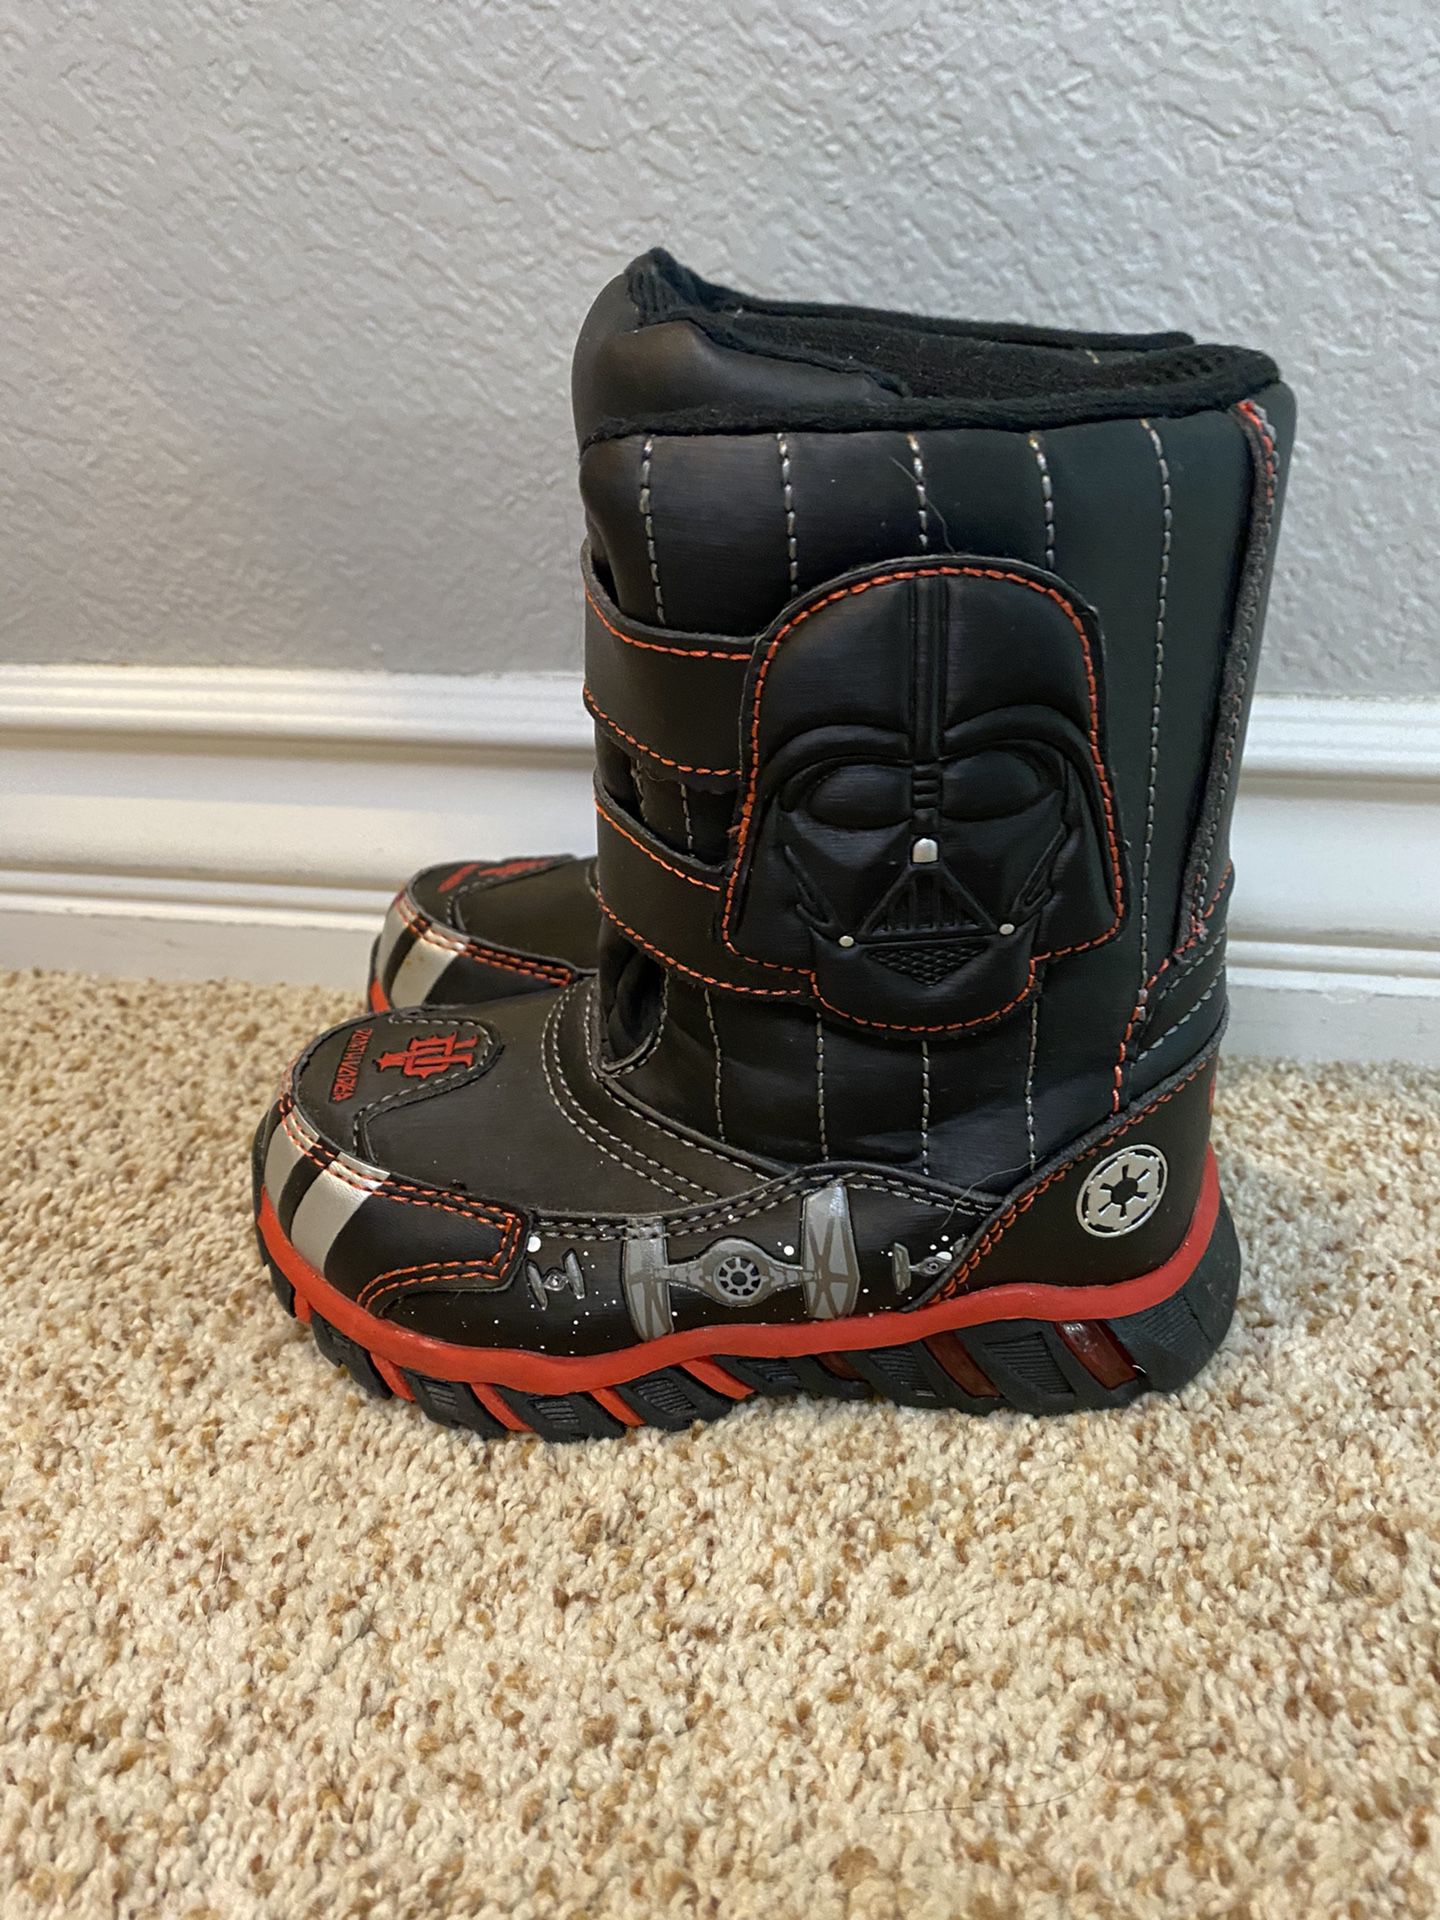 Star Wars/Darth Vader Toddler Snow Boots, size 7/8